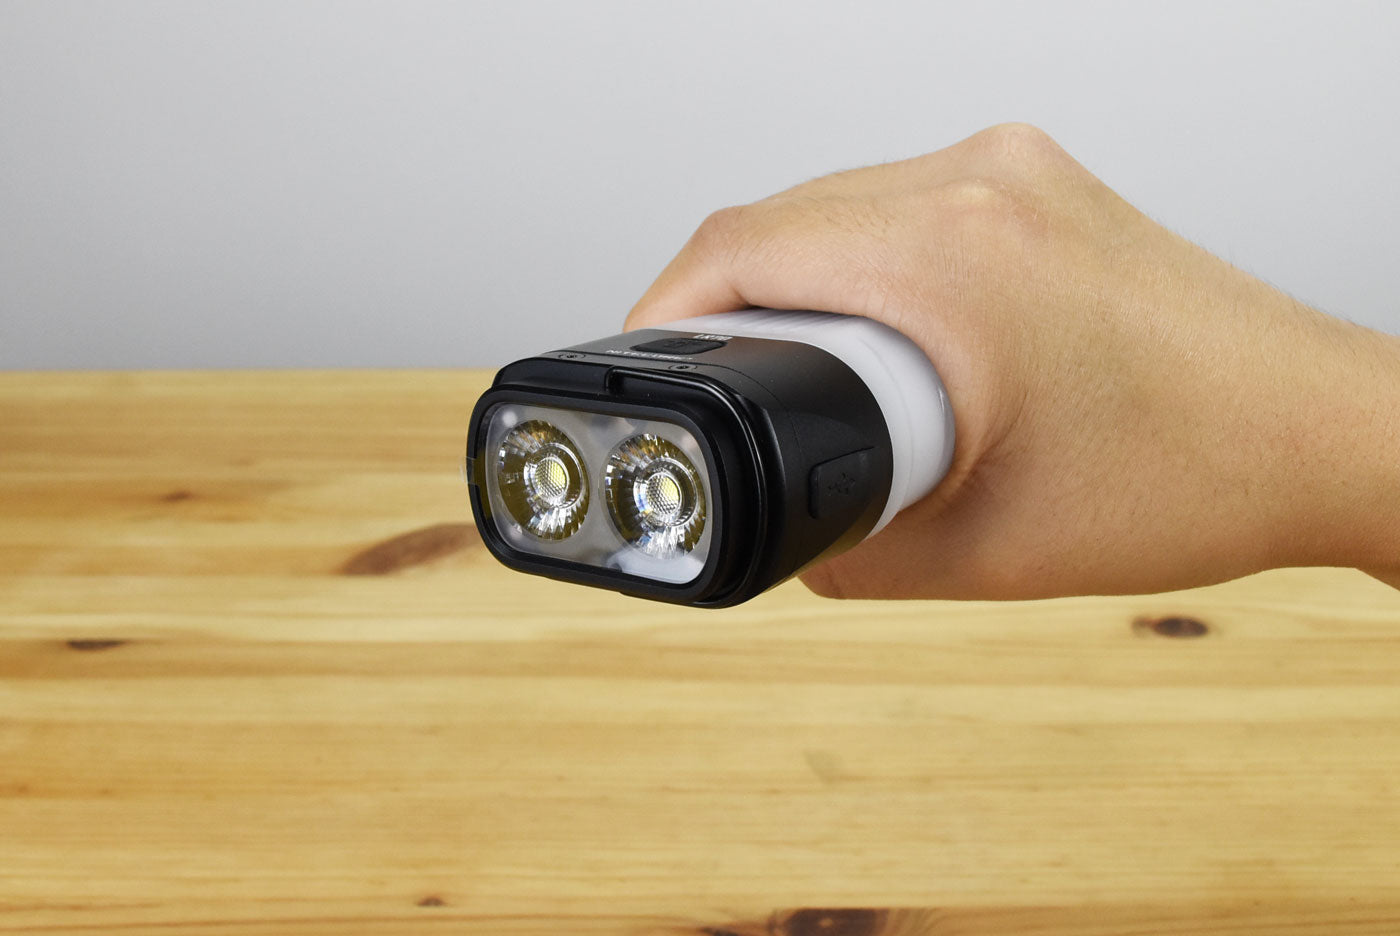 Nitecore LR70 3-In-1 Rechargeable Lantern Flashlight (3000 Lumens)